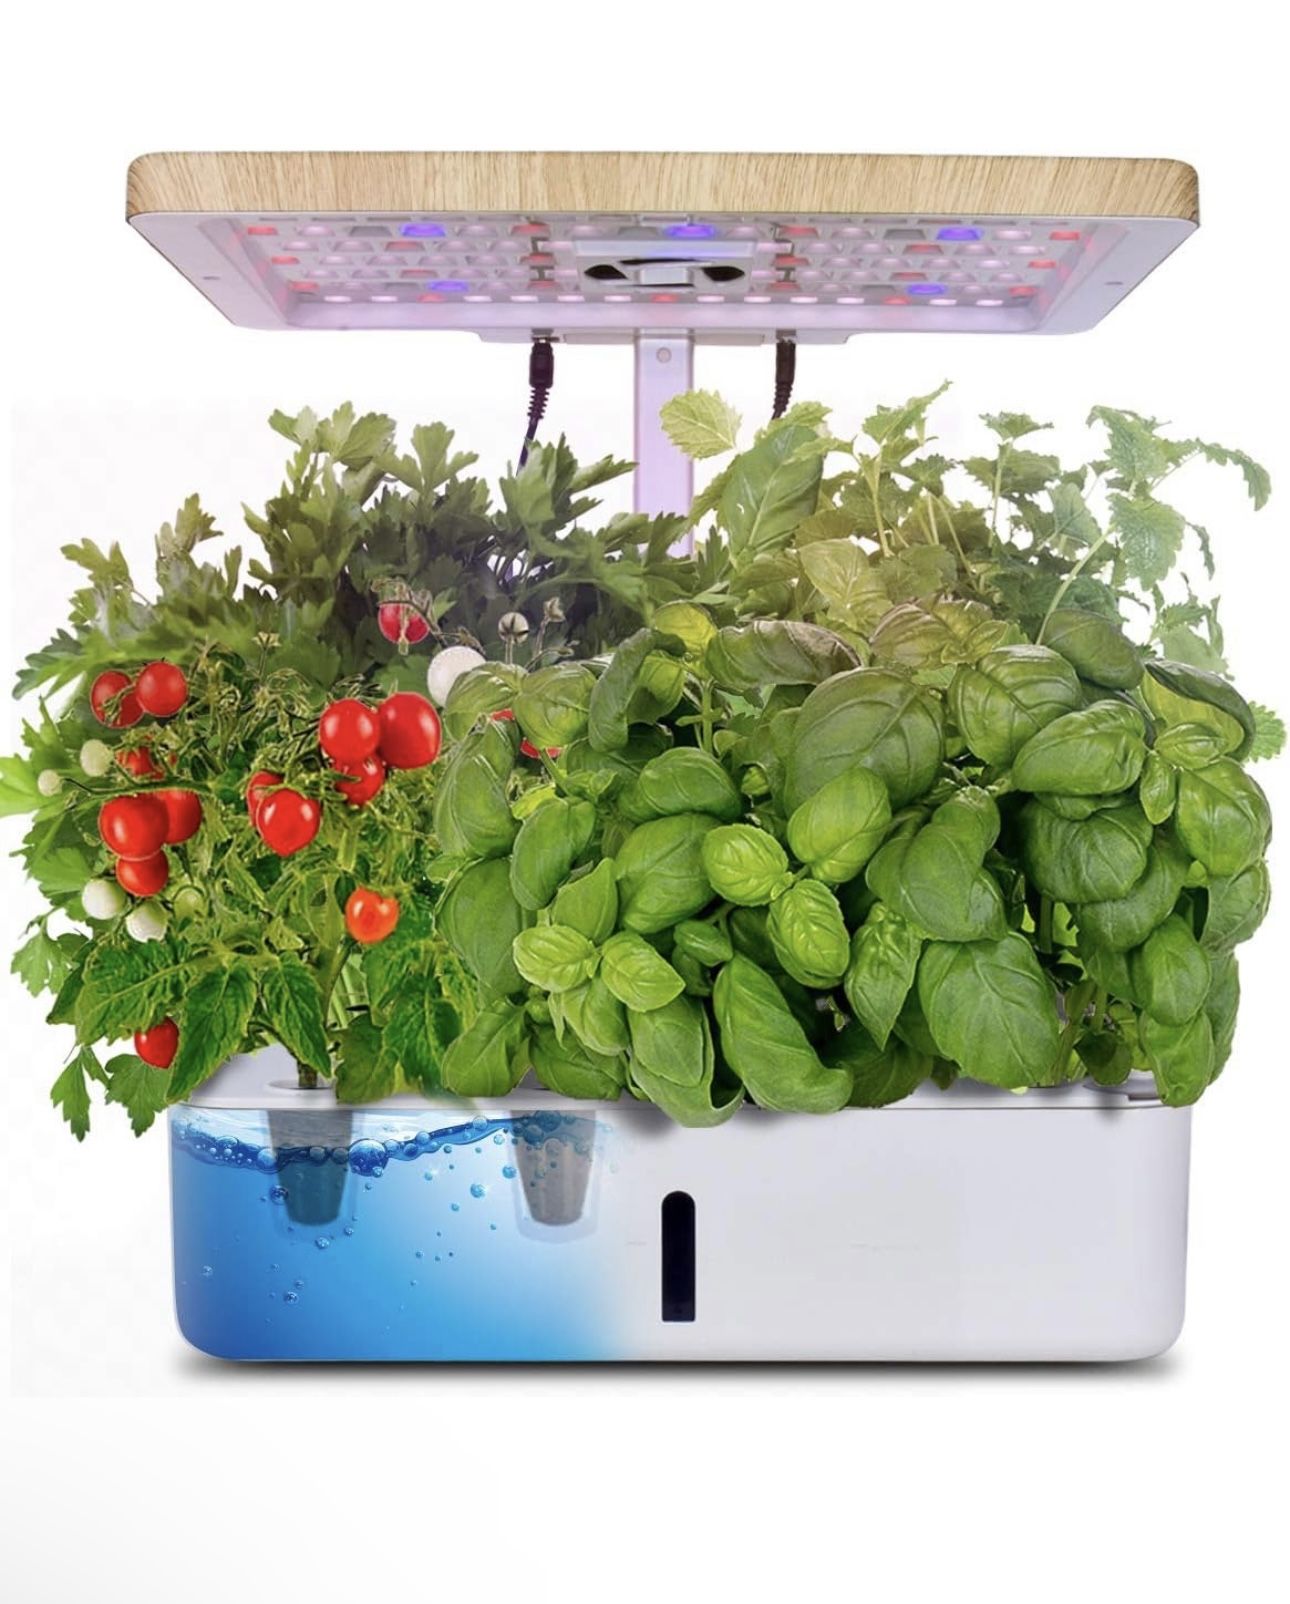 moistenland Hydroponics Growing System, Indoor Herb Garden Starter Kit, LED Grow Light, Plant Germination Kits 12 Plant Pods for Home Kitchen Gardenin